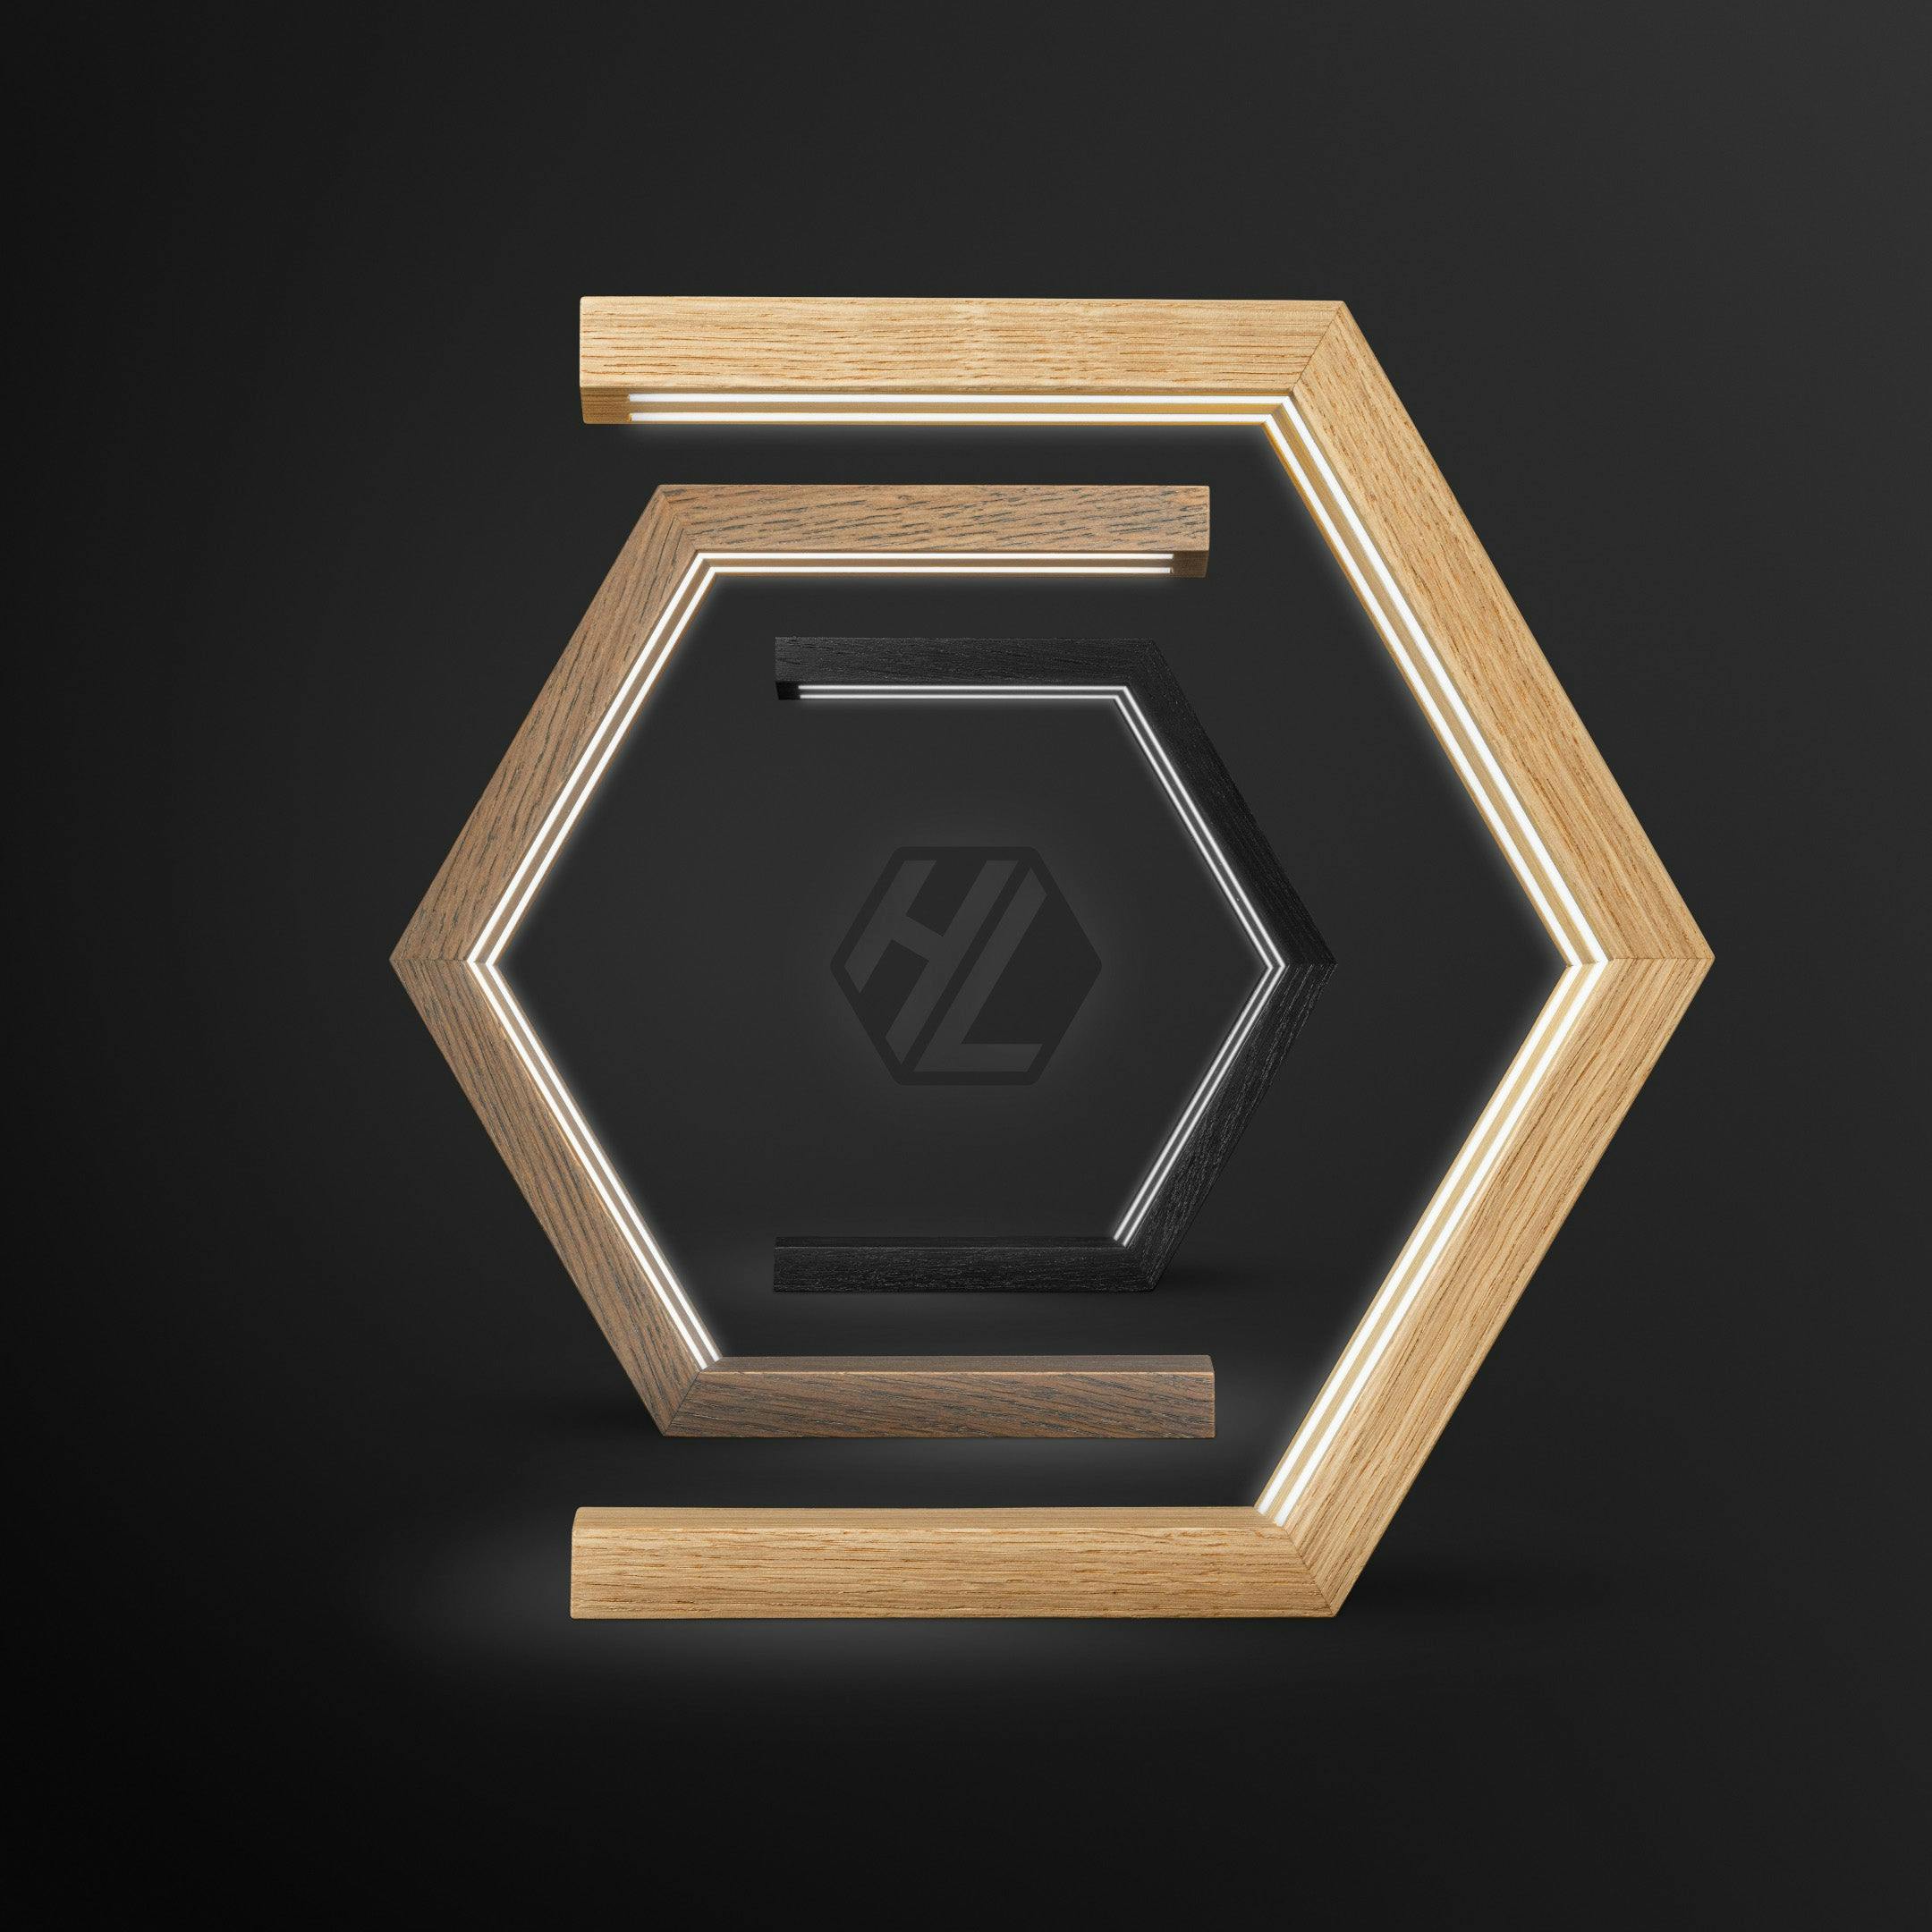 Hexalight logo